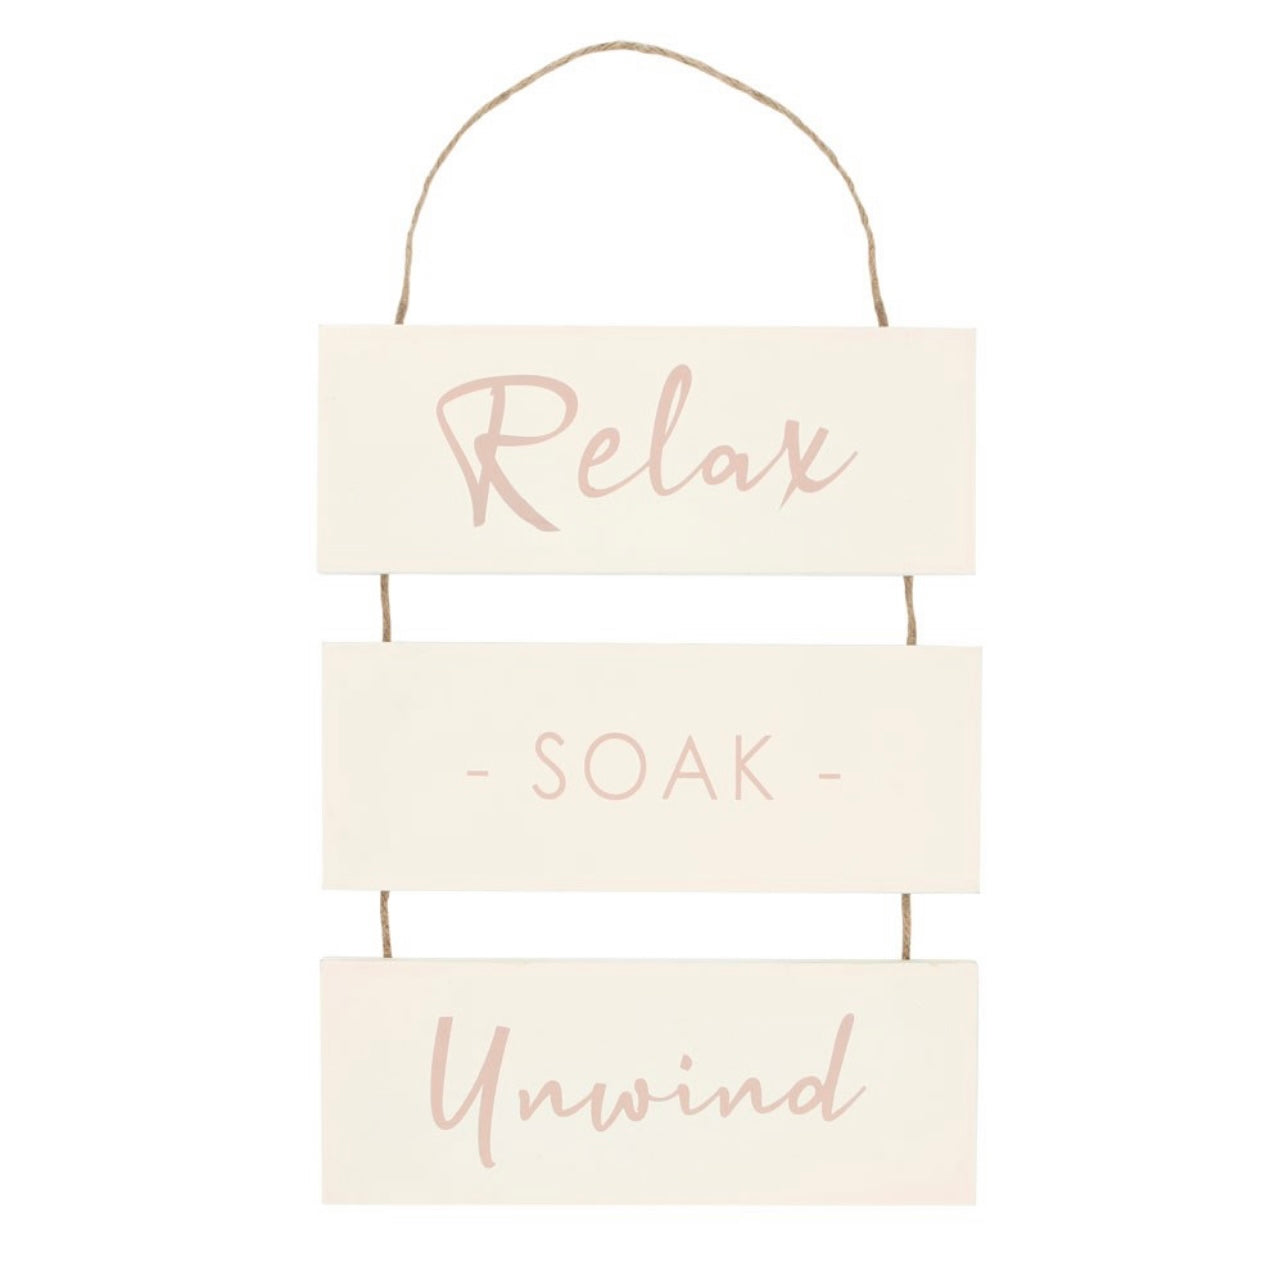 Relax - Soak - Unwind Sign